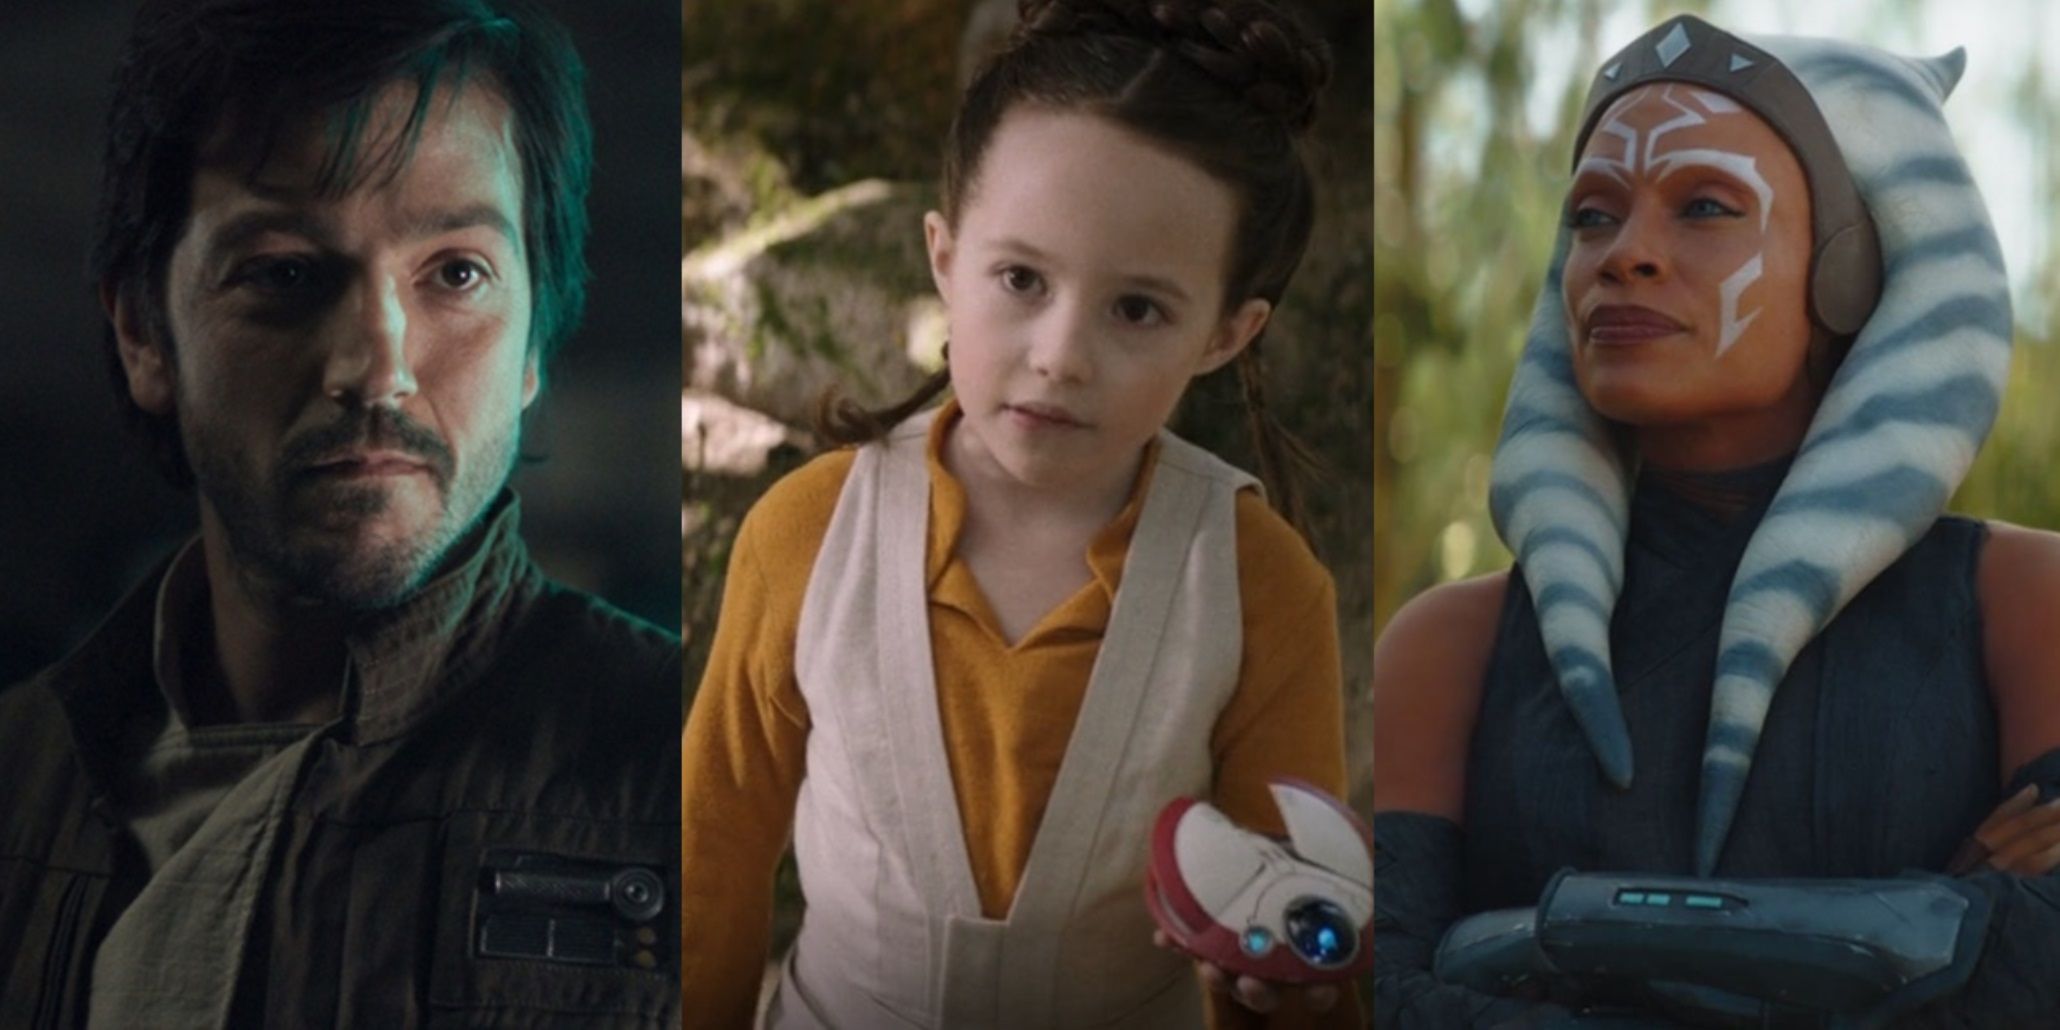 Split image of Diego Luna as Cassian Andor, Vivien Lyra Blair as Leia Organa, and Rosario Dawson as Ahsoka Tano